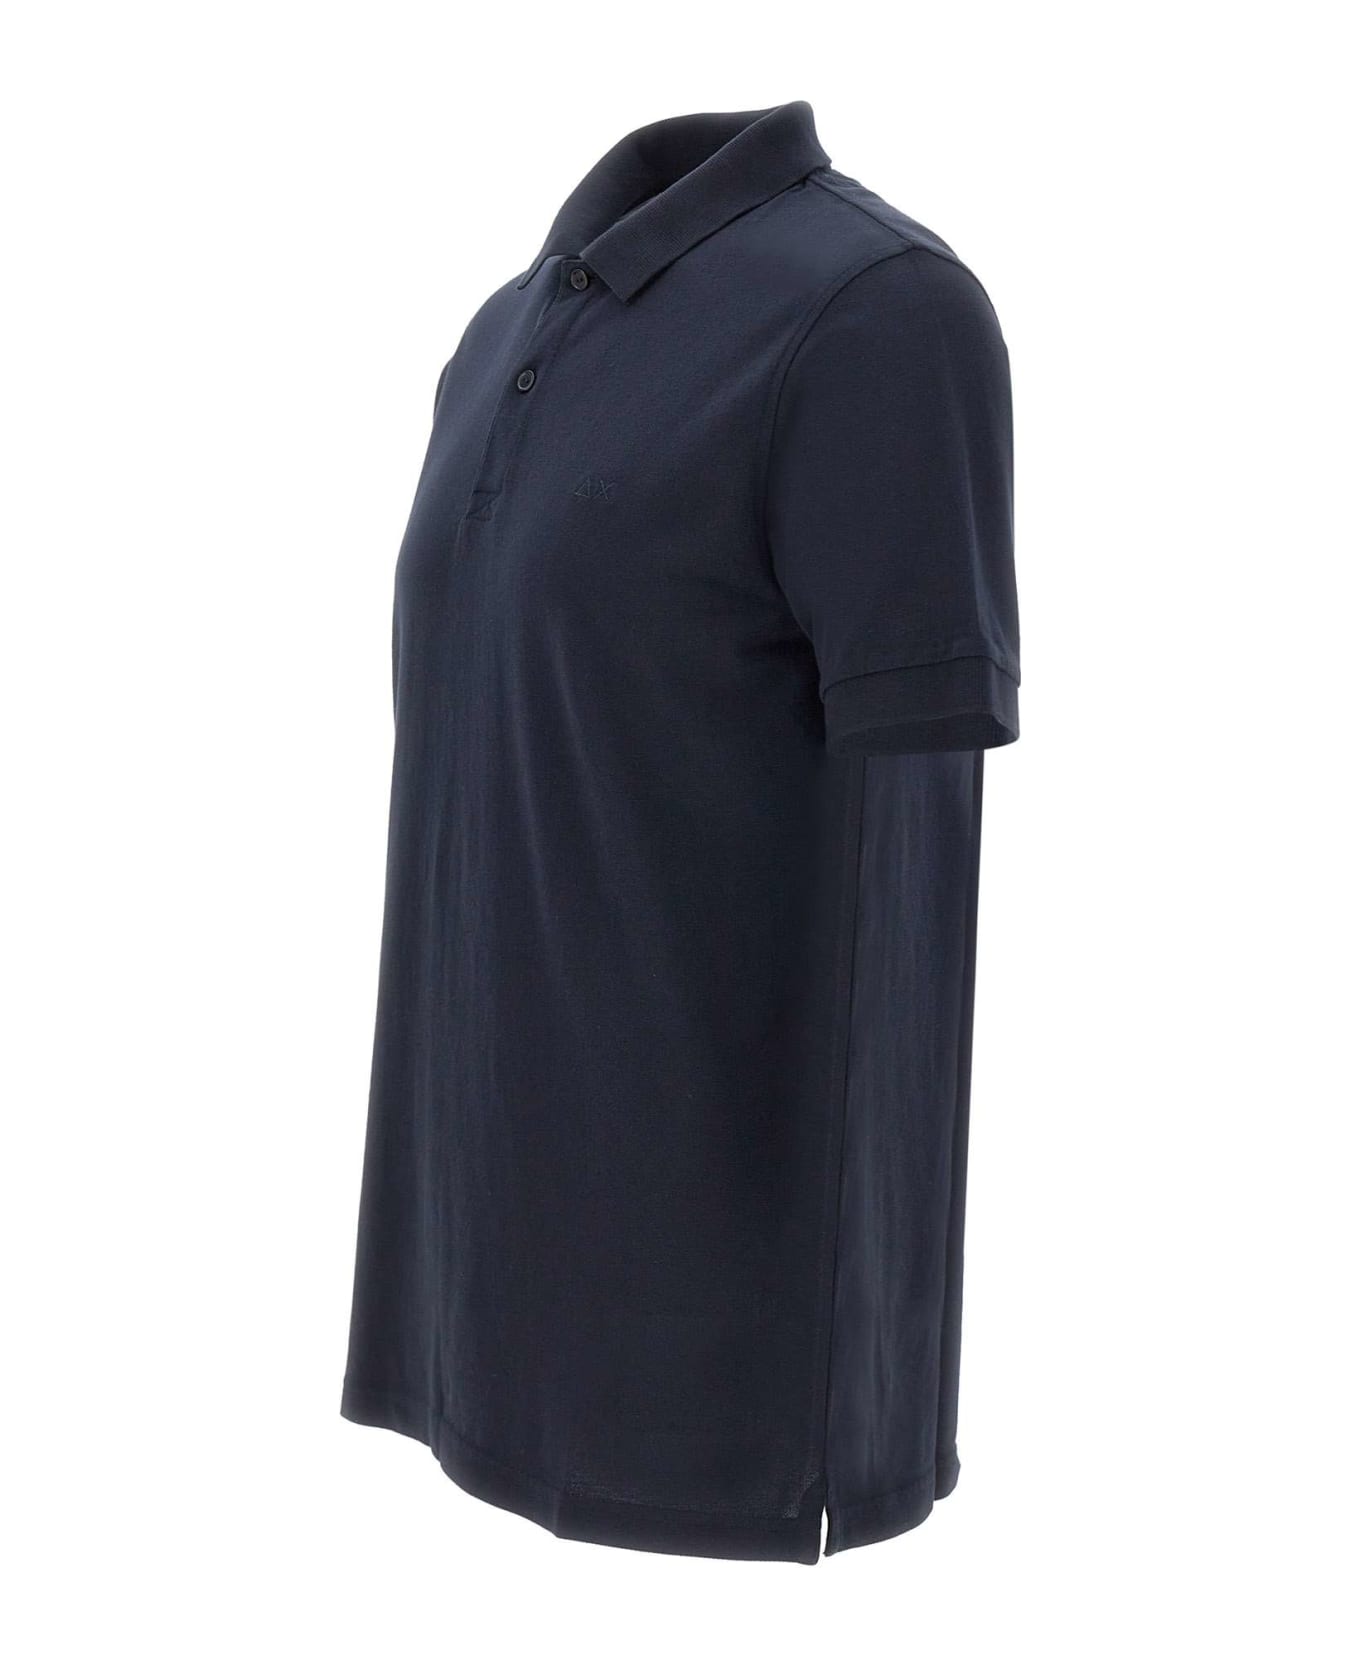 Sun 68 "cold Garment Dye" Cotton Polo Shirt - BLUE